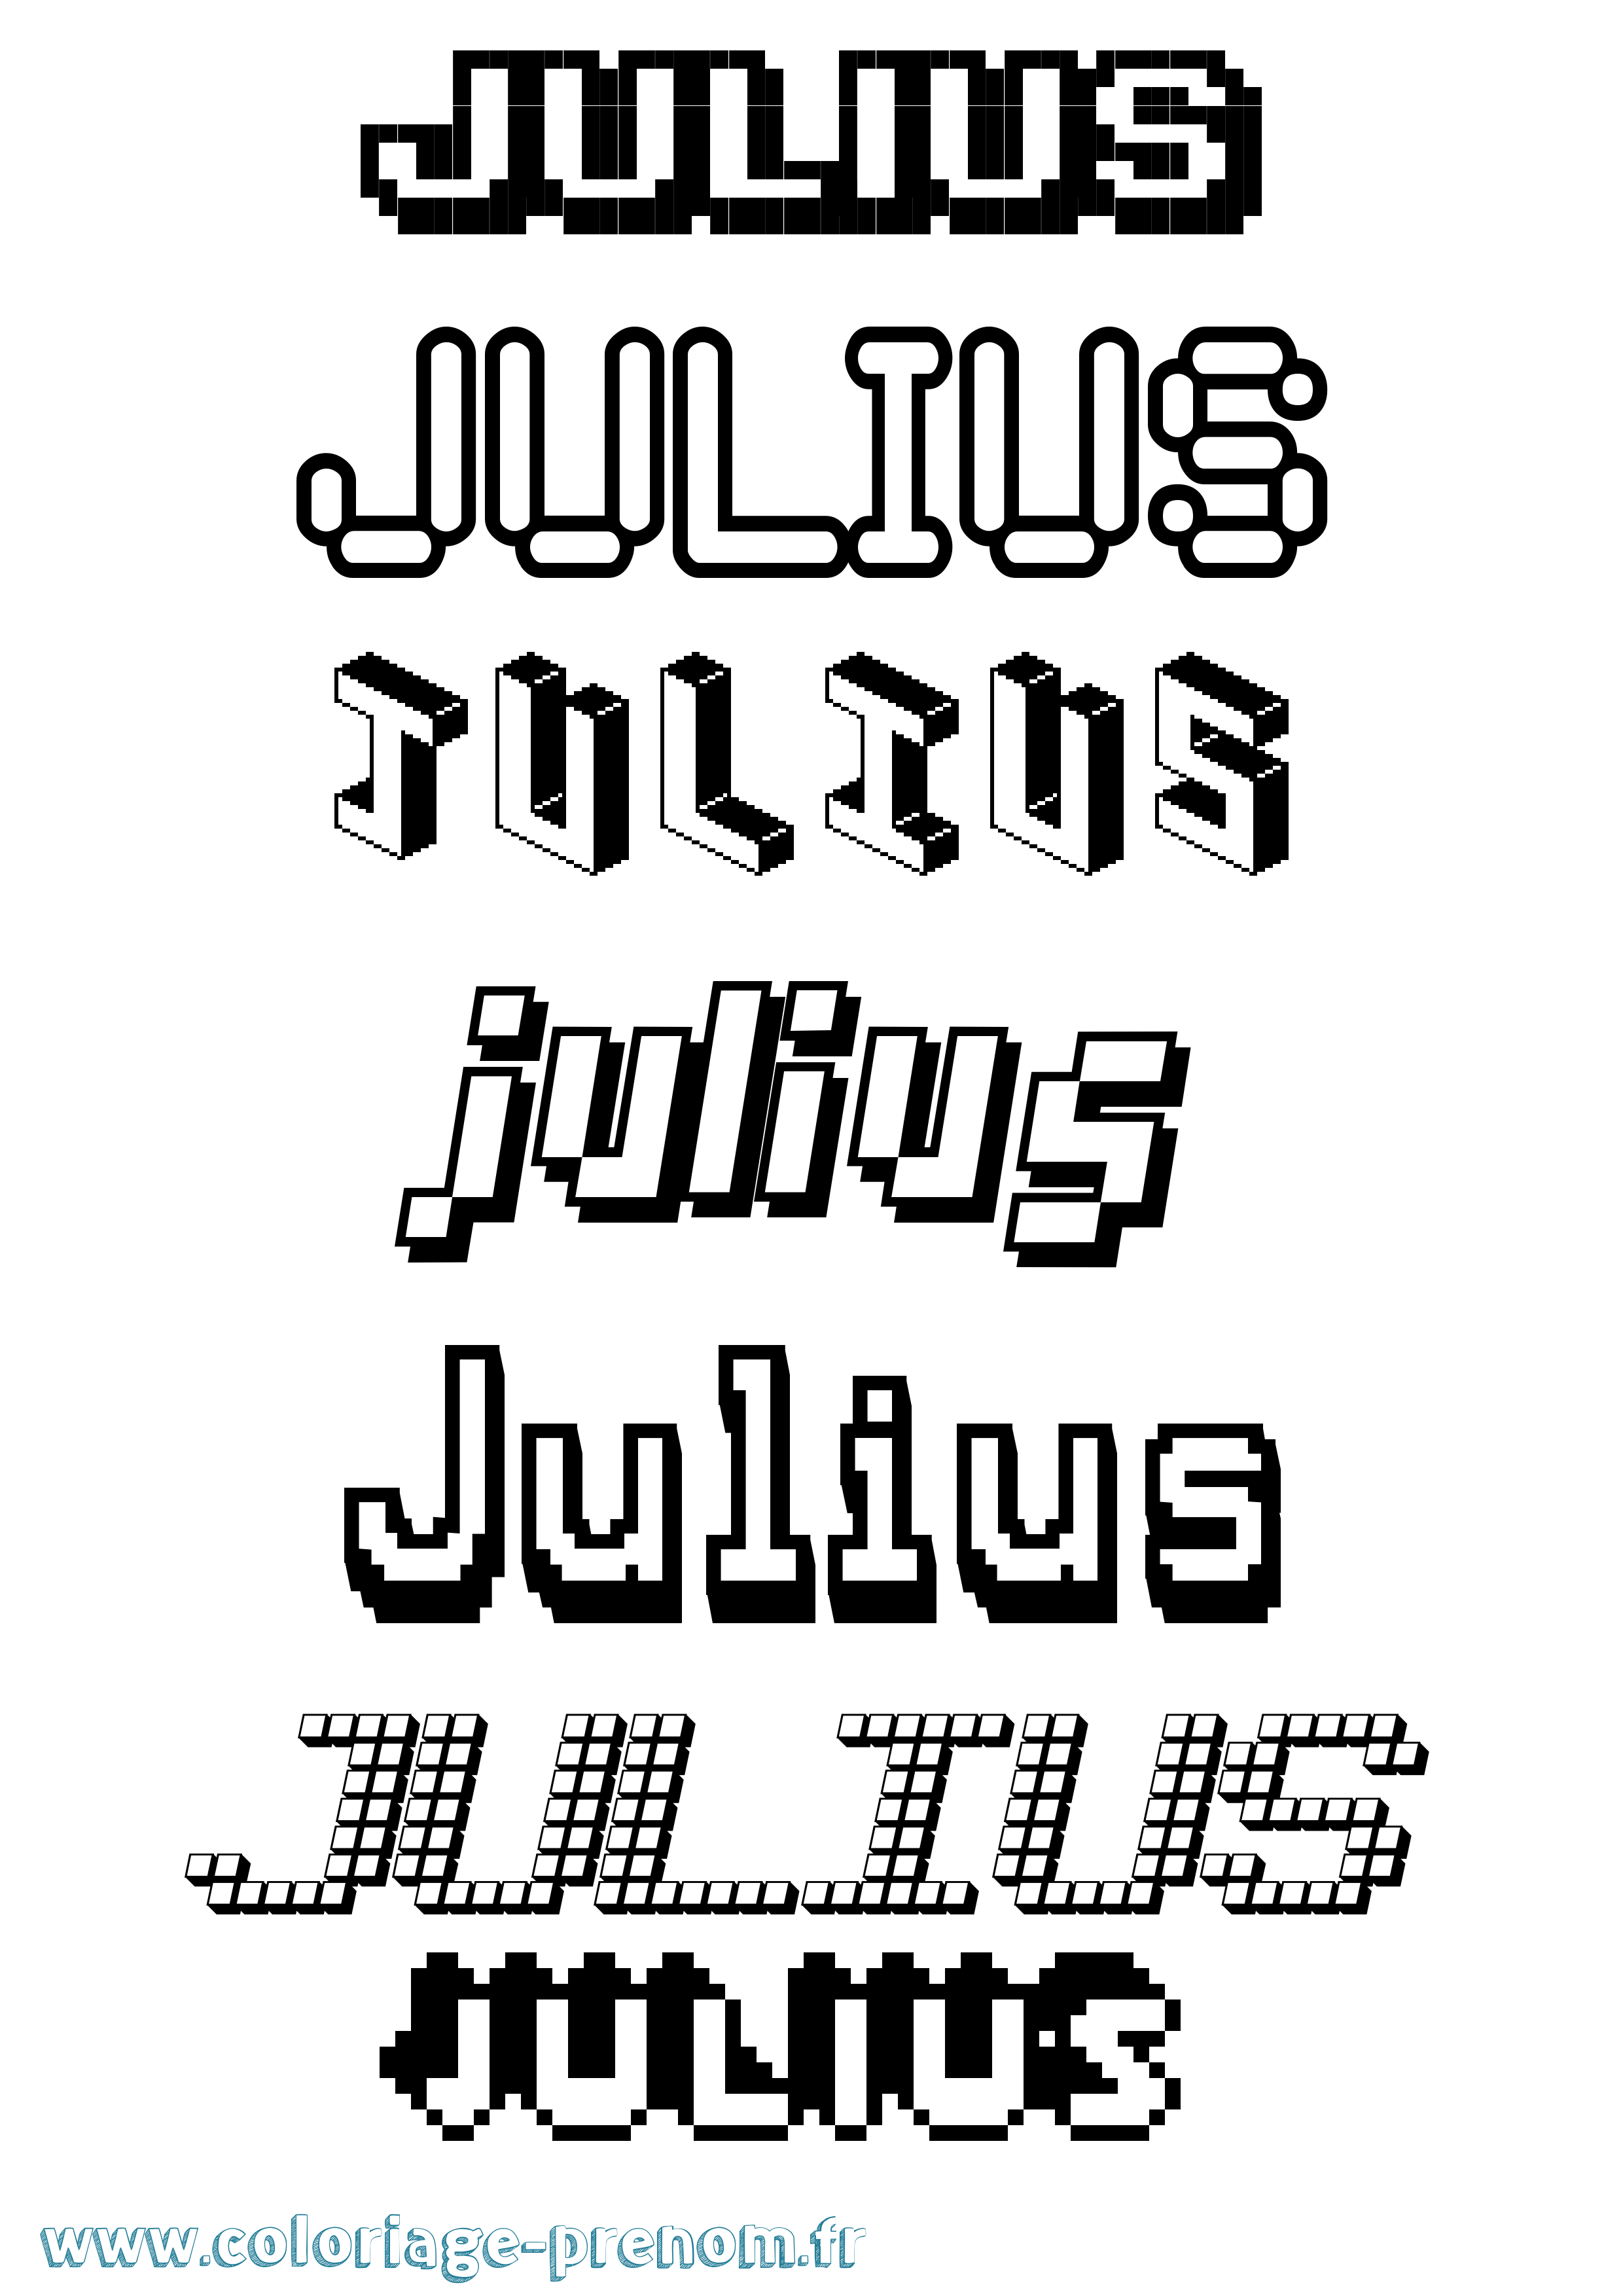 Coloriage prénom Julius Pixel